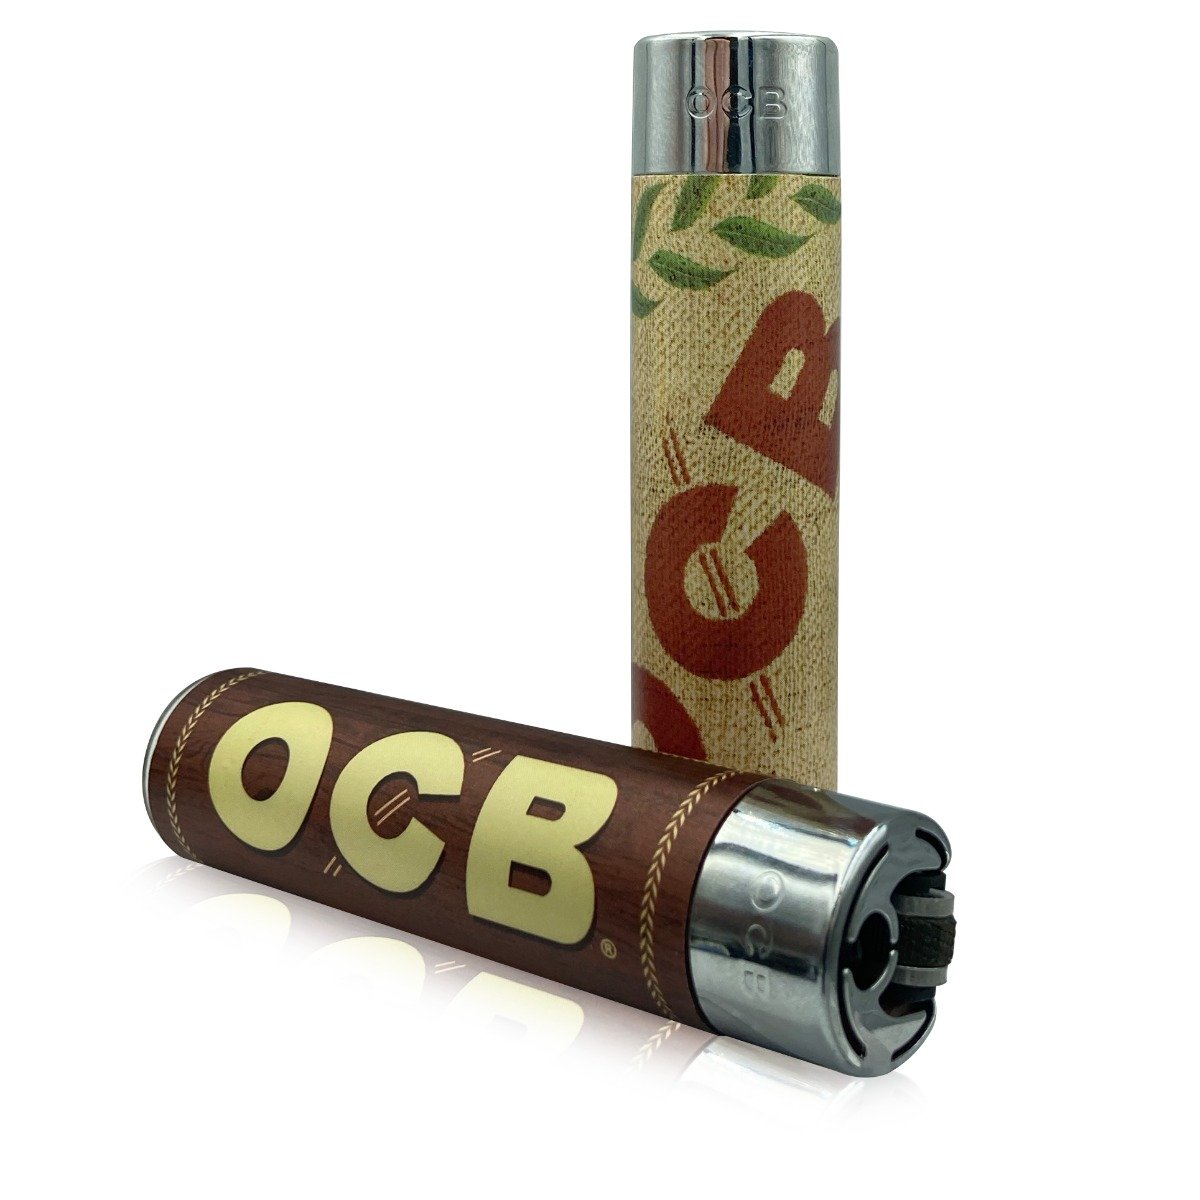 OCB Refillable Lighter